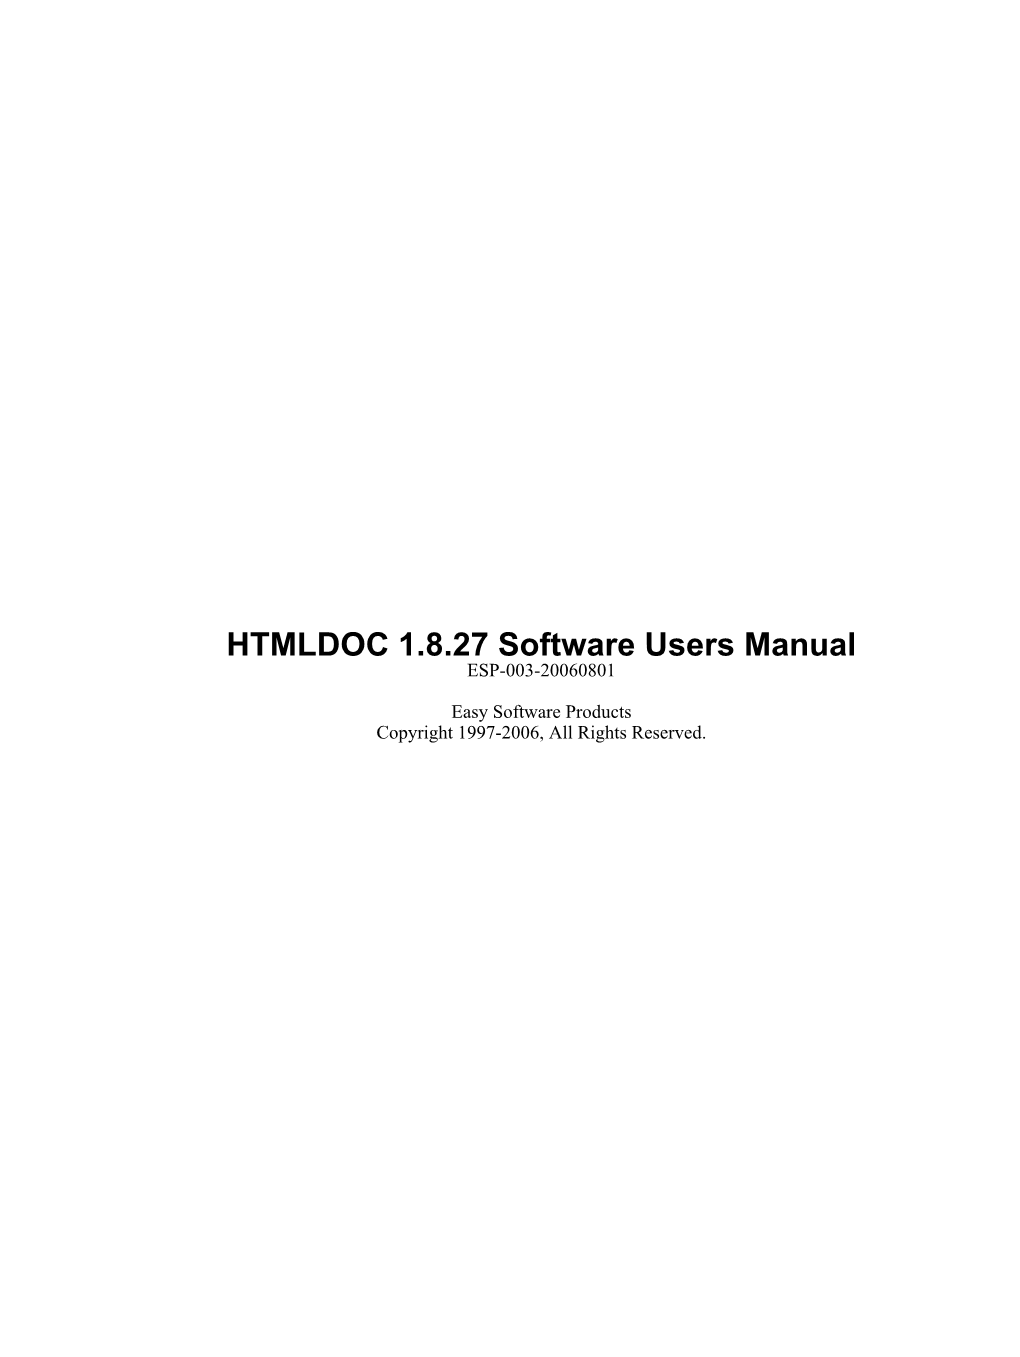 HTMLDOC 1.8.27 Software Users Manual ESP-003-20060801